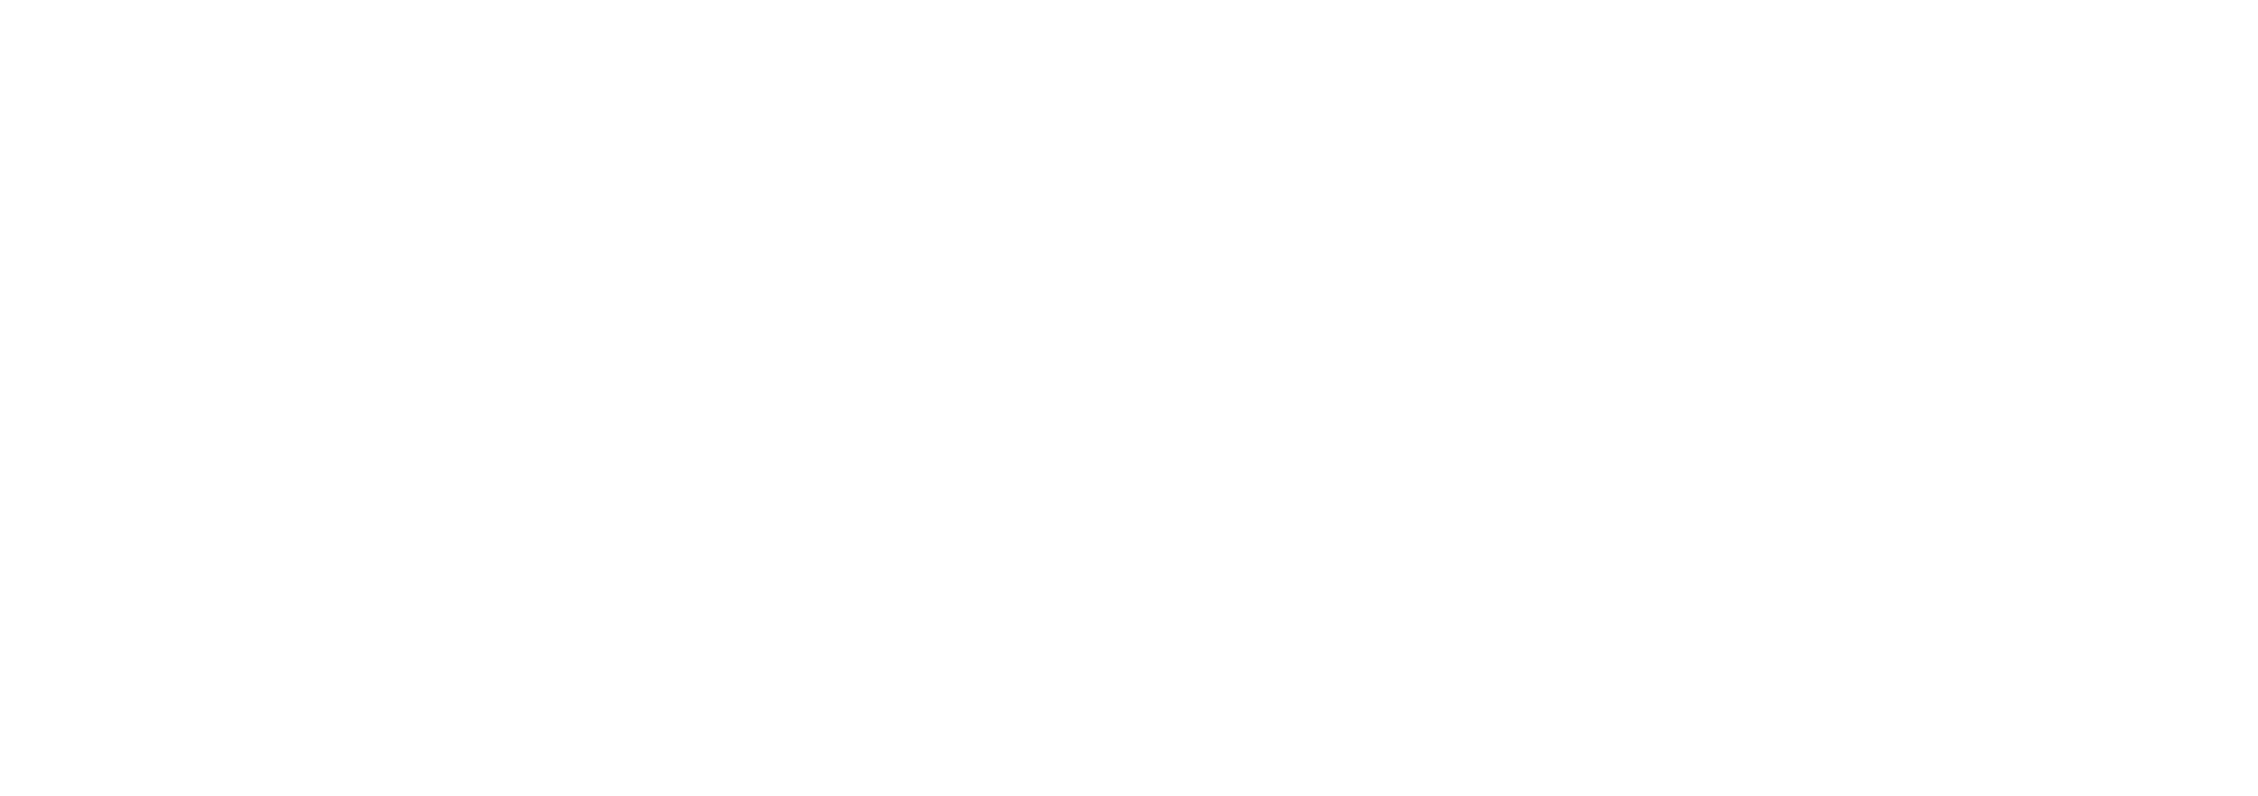 Sweetwoods Driving Range